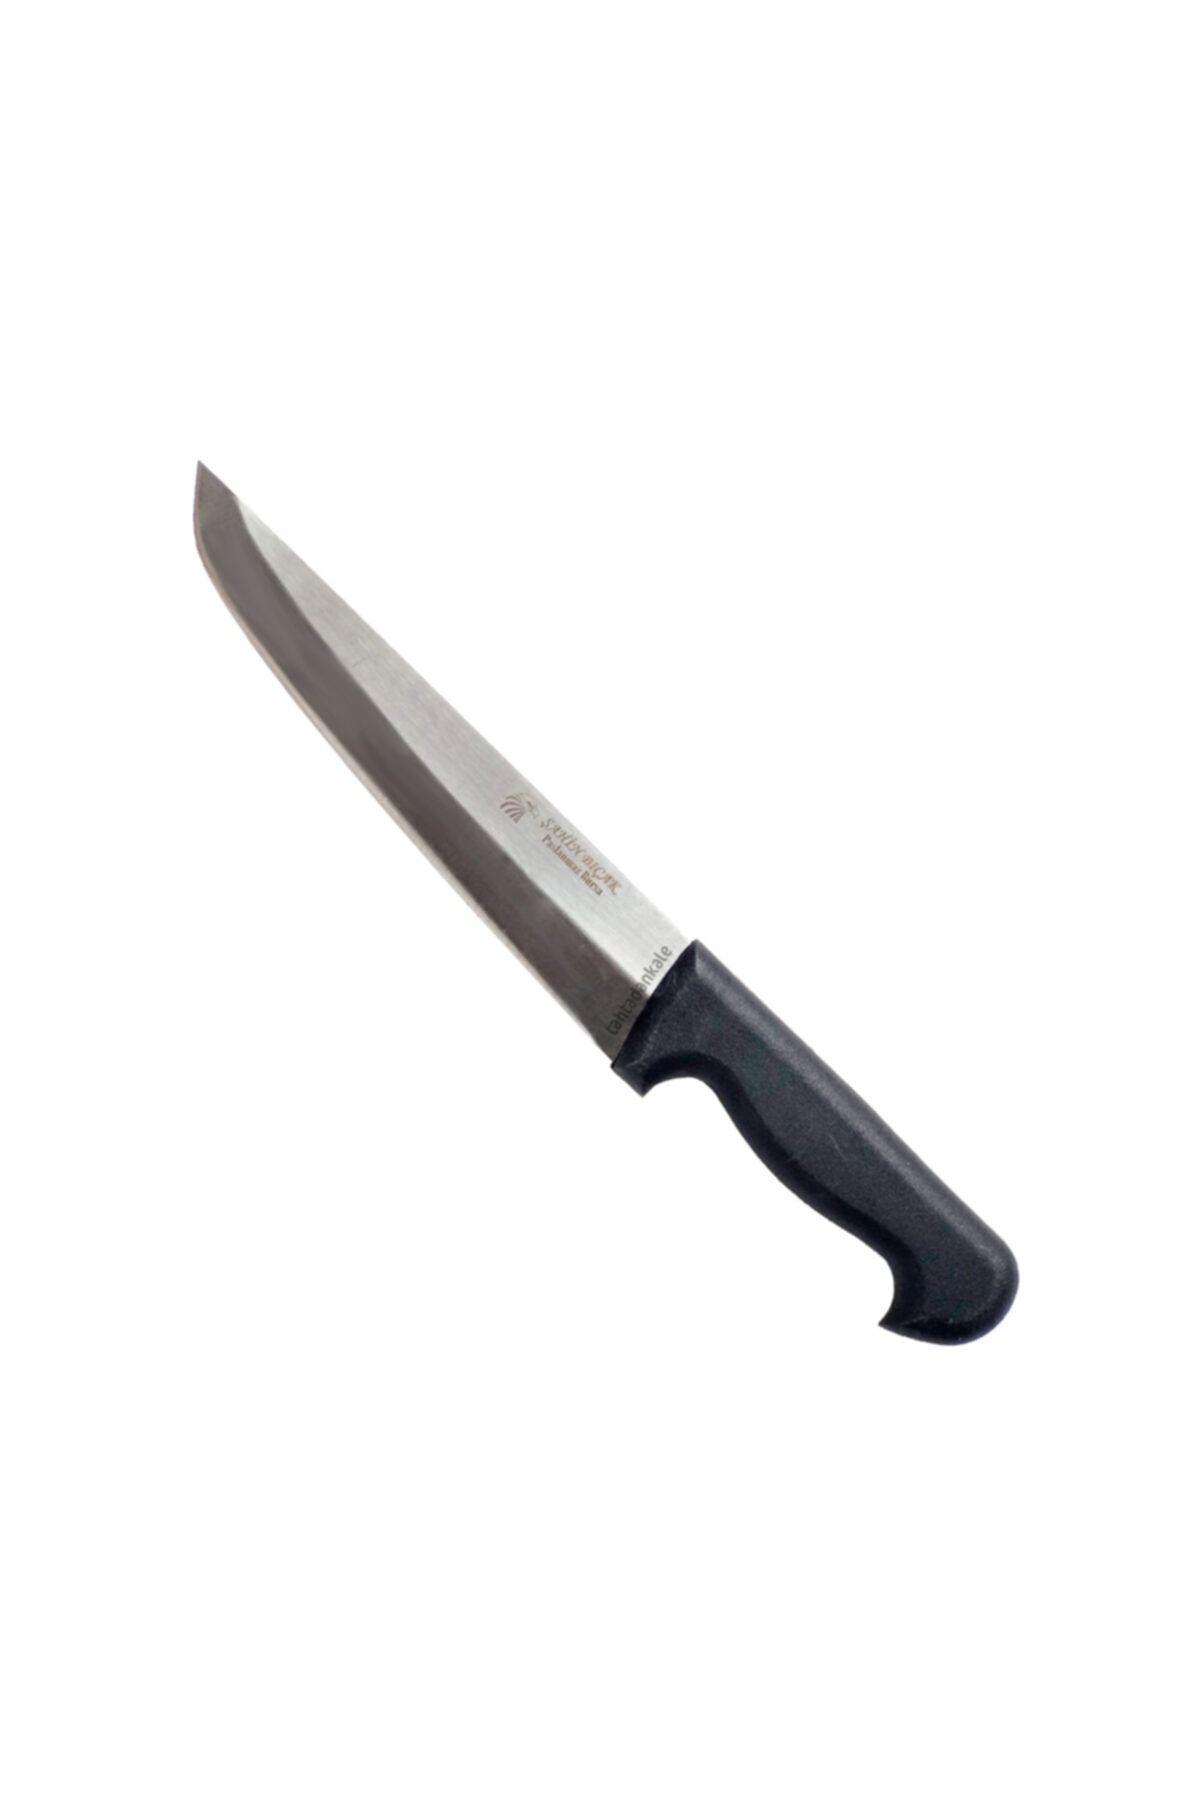 Şahin Bursa Ince Mutfak Bıçağı No 4 20 cm Plastik Sap